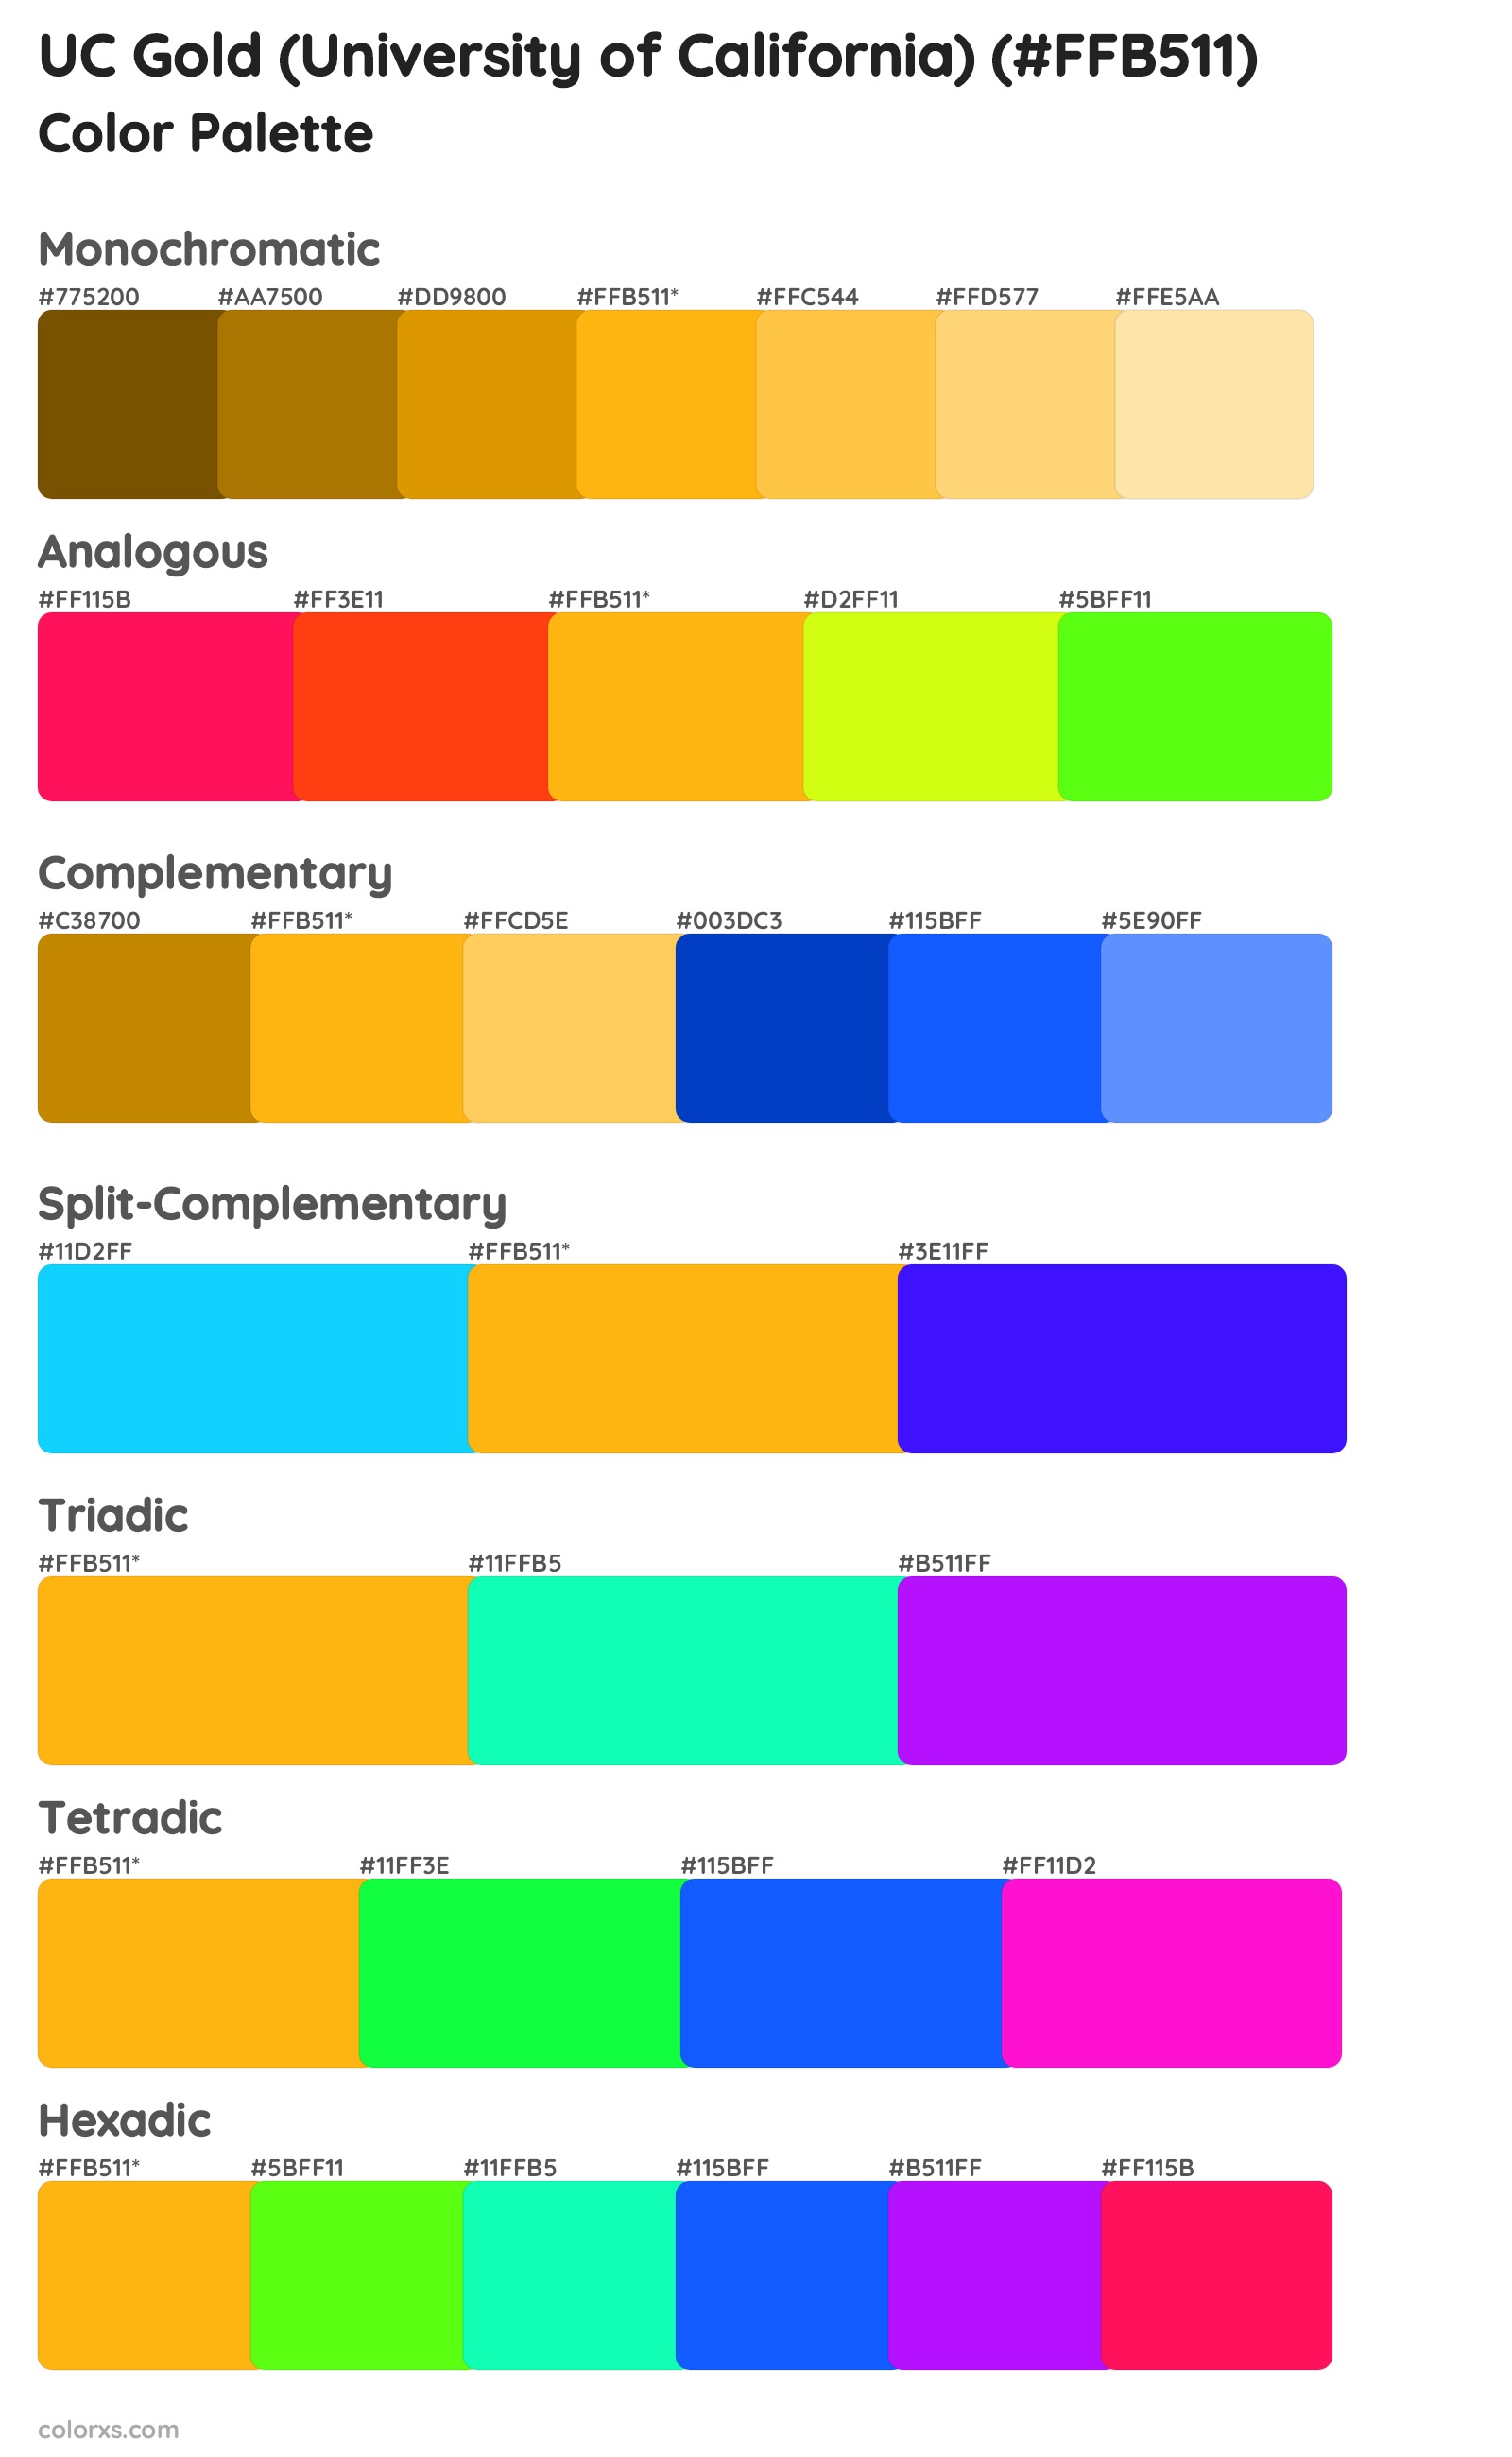 UC Gold (University of California) Color Scheme Palettes